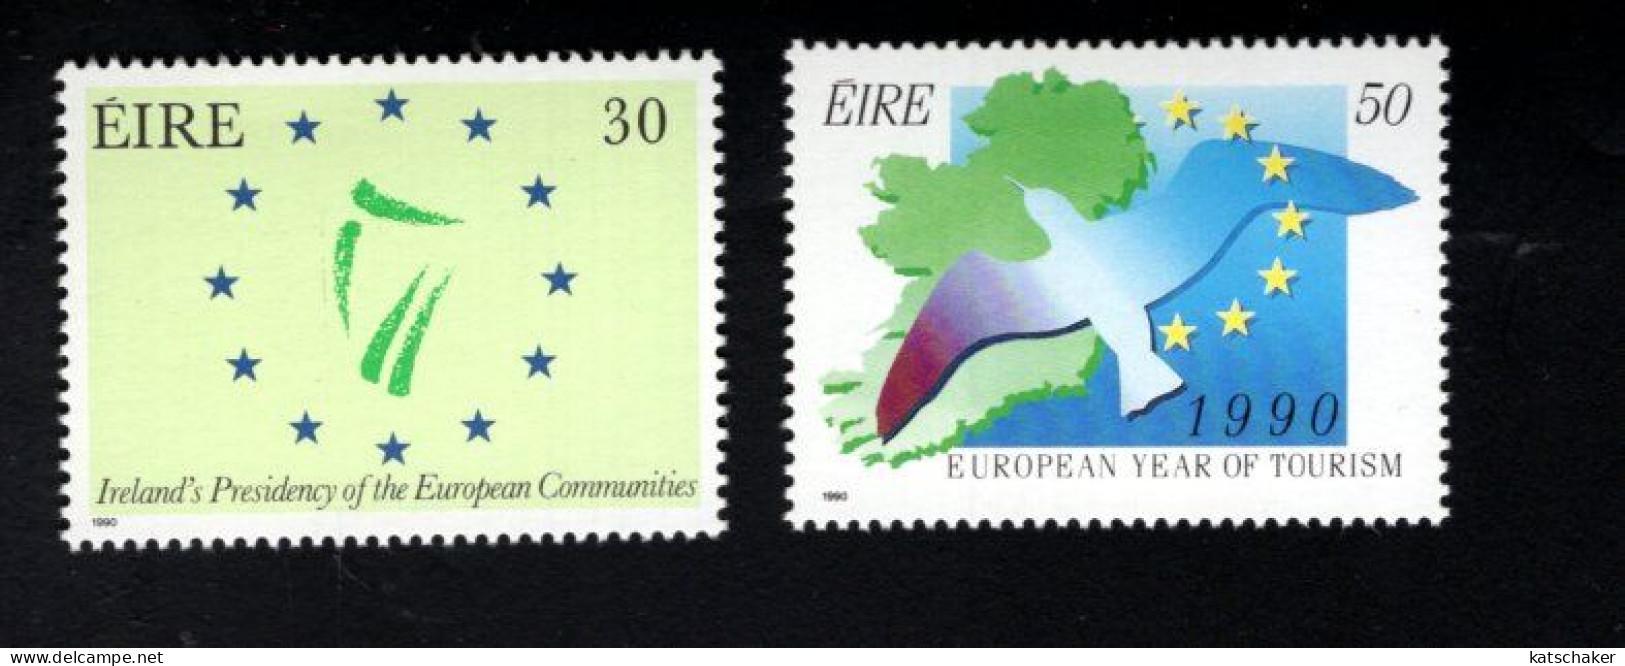 1997048771 1990  SCOTT 763 764  (XX) POSTFRIS  MINT NEVER HINGED - IRELAND PRESIDENCY OF THE EUROPEAN COMMUNITIES - Ungebraucht